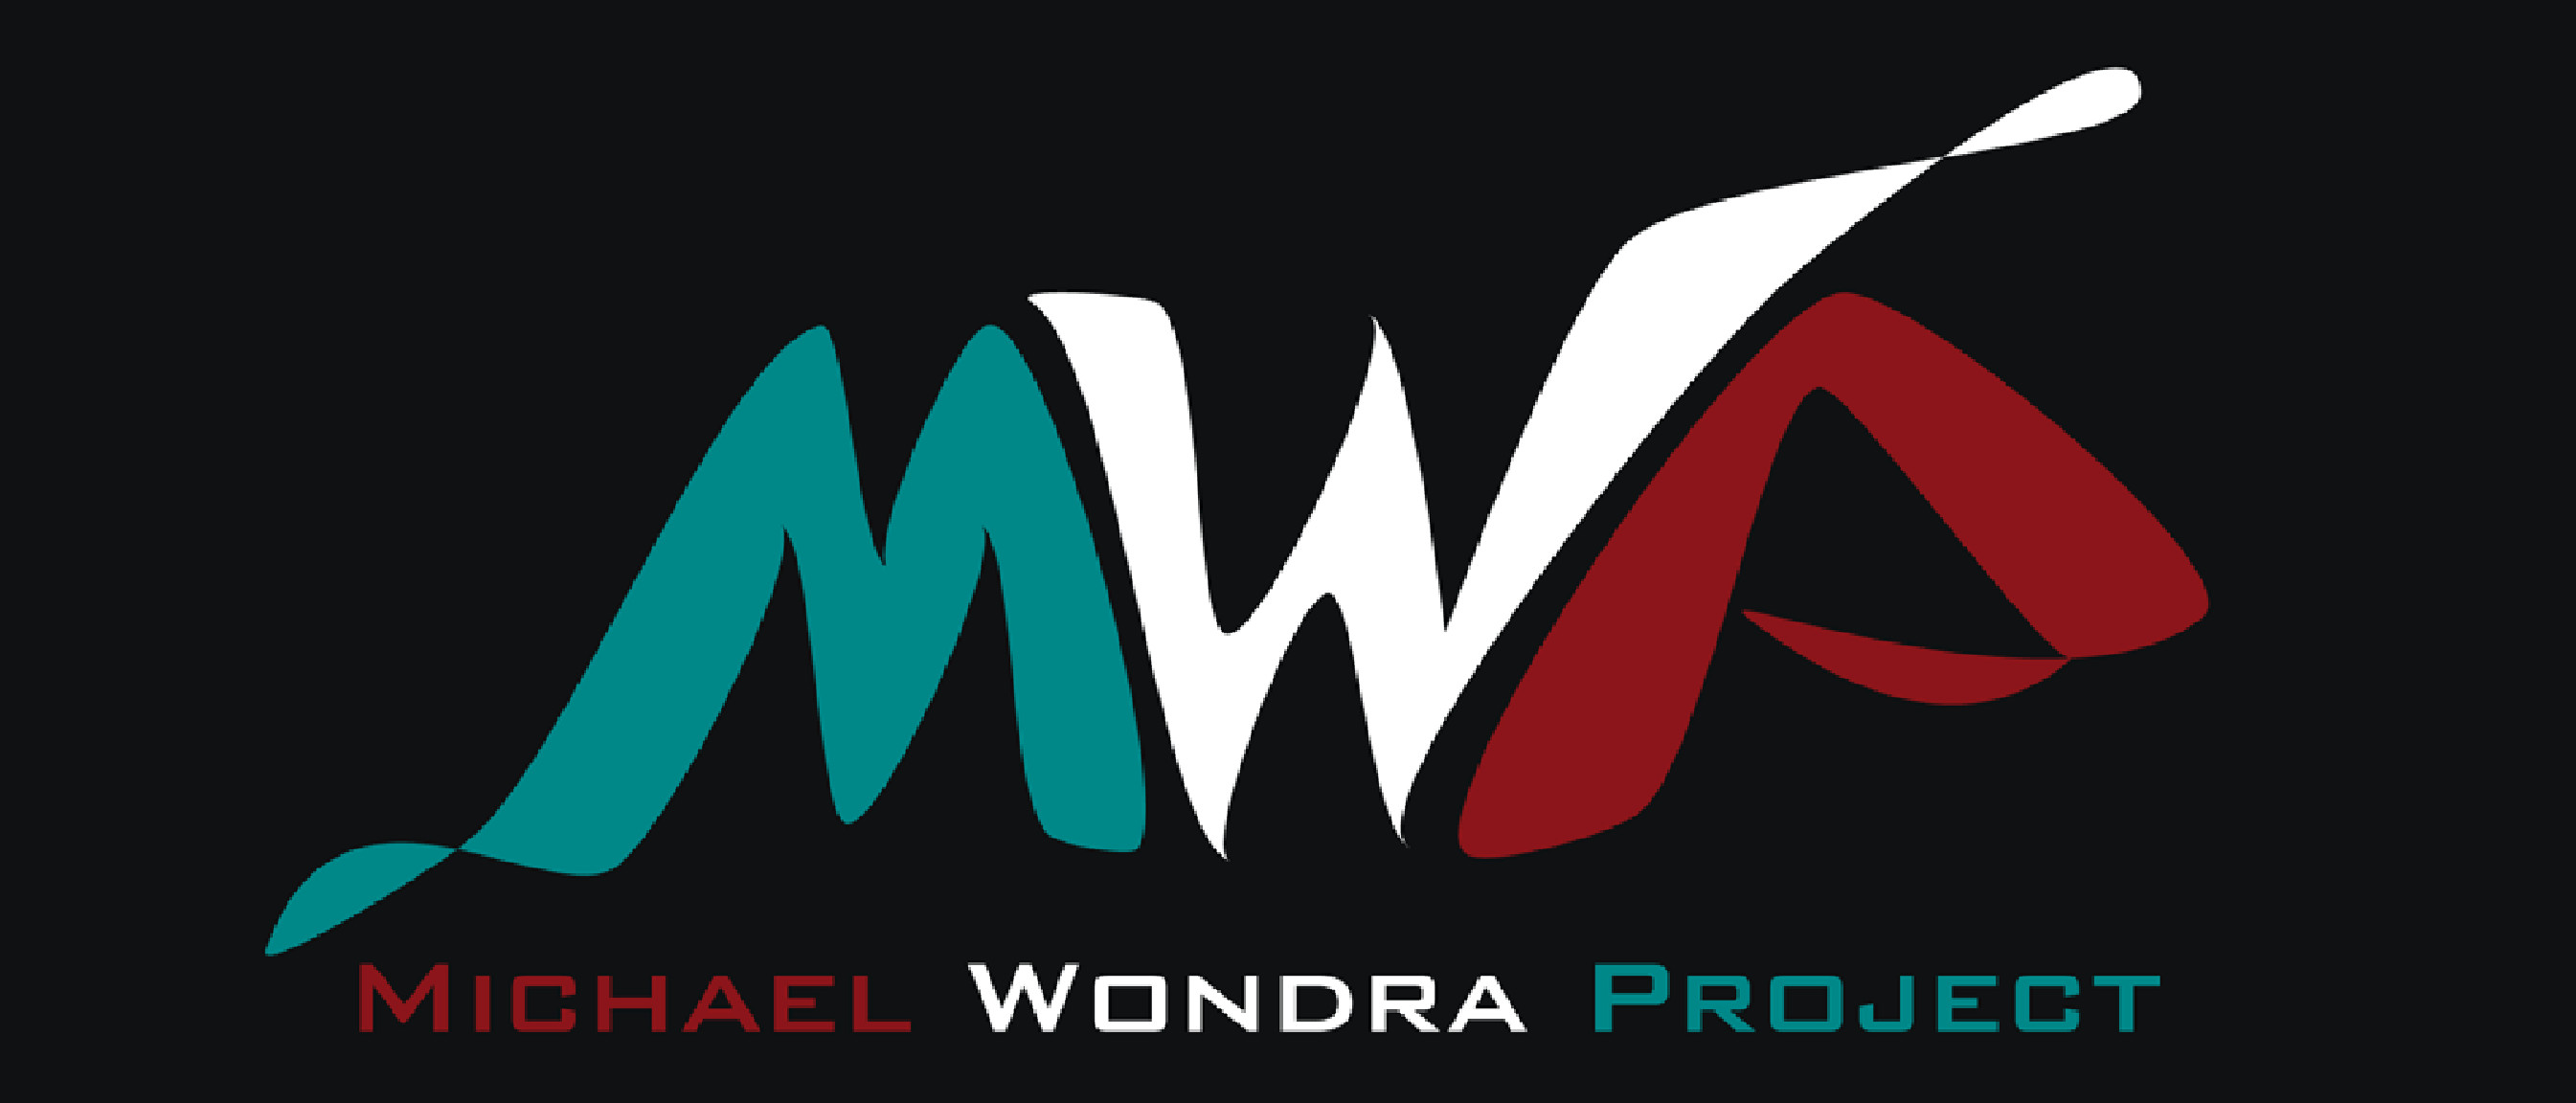 (c) Michael-wondra-project.com